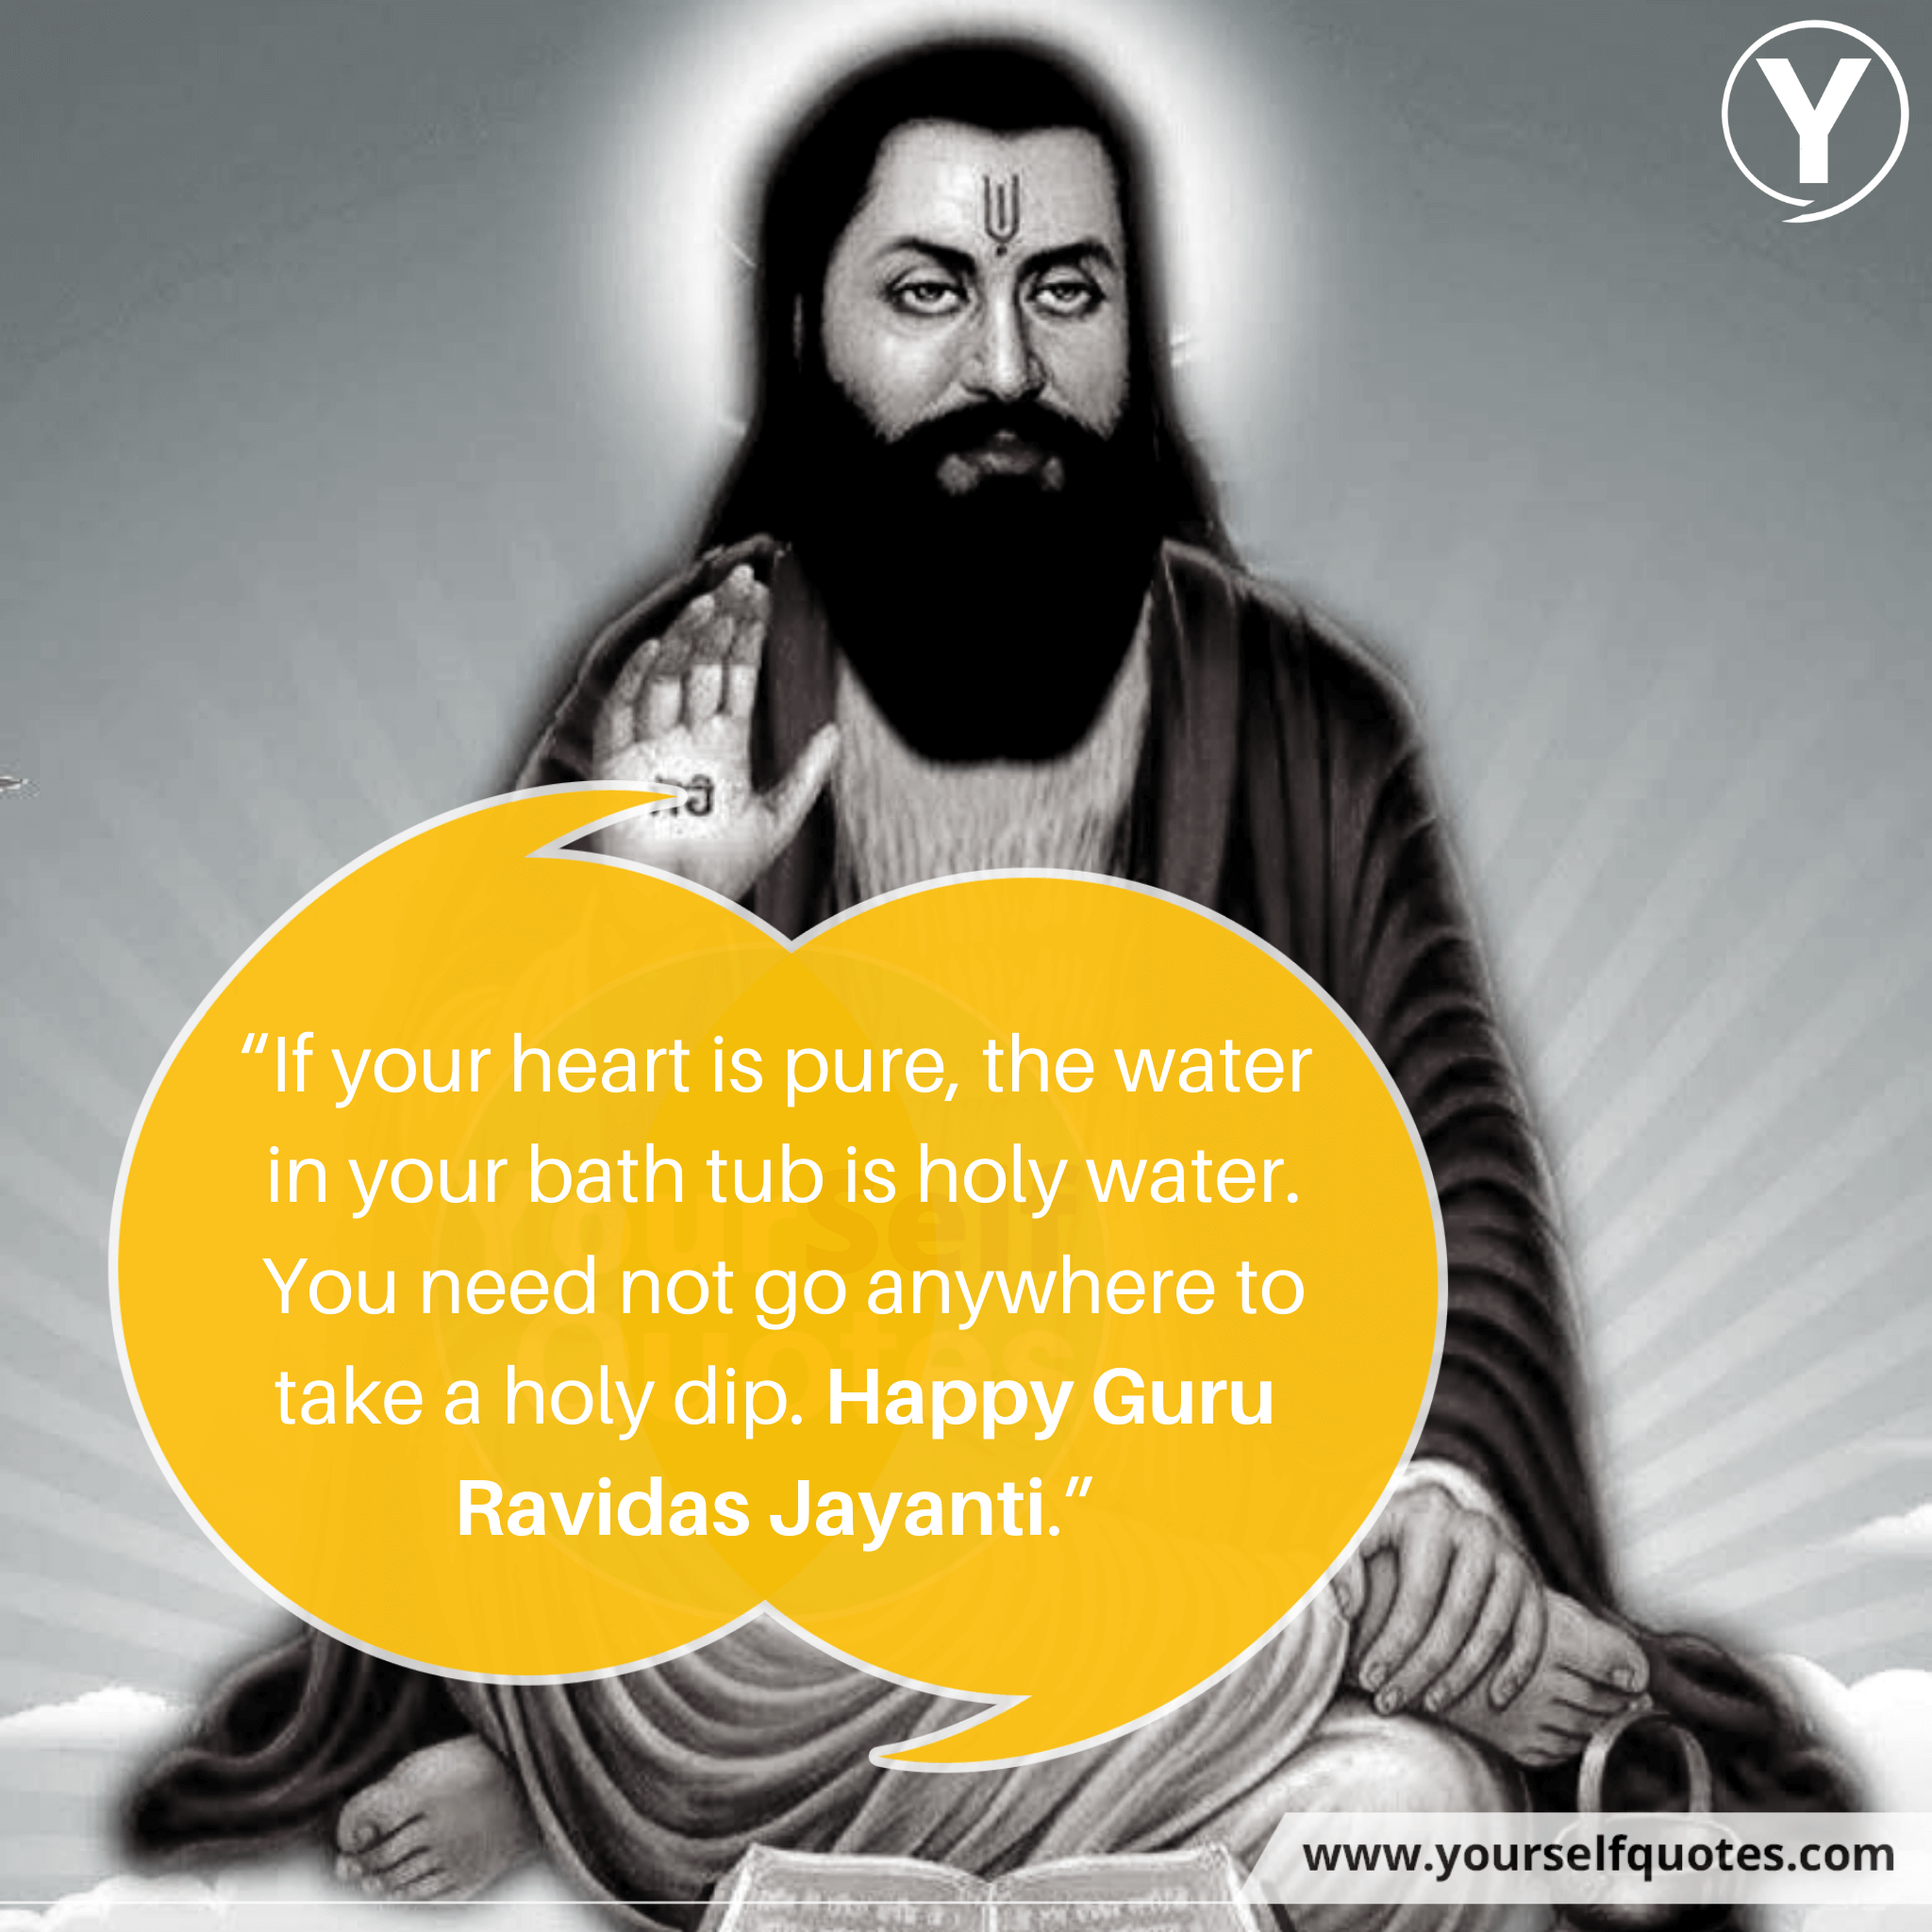 Guru Ravidas Jayanti Wishes Quotes